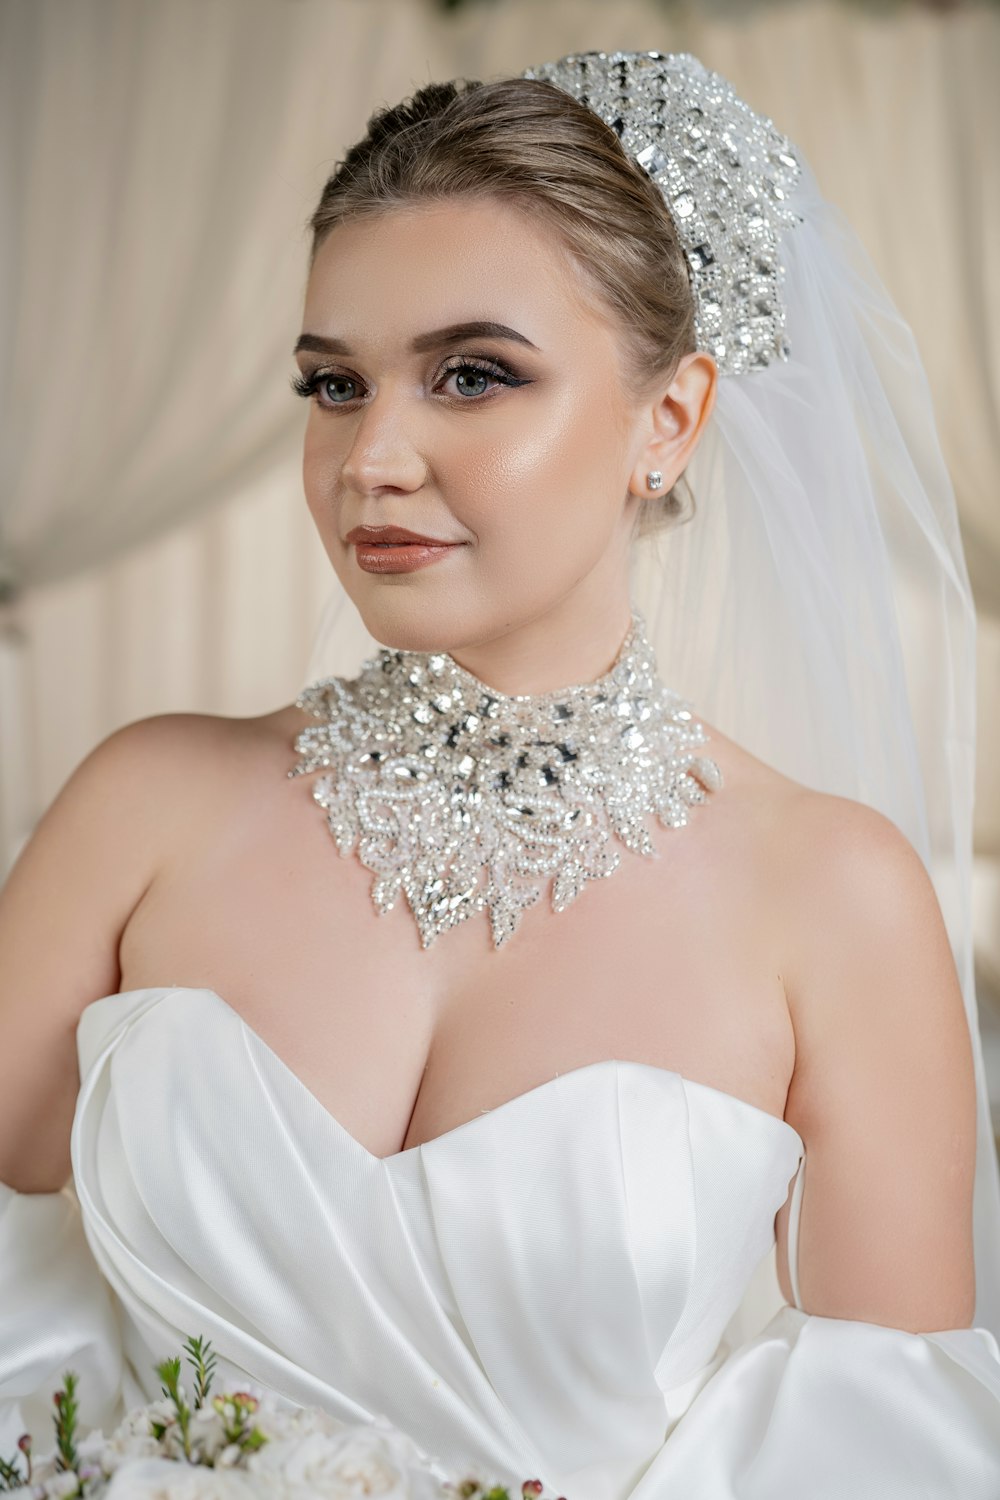 a woman in a wedding dress wearing a tiara